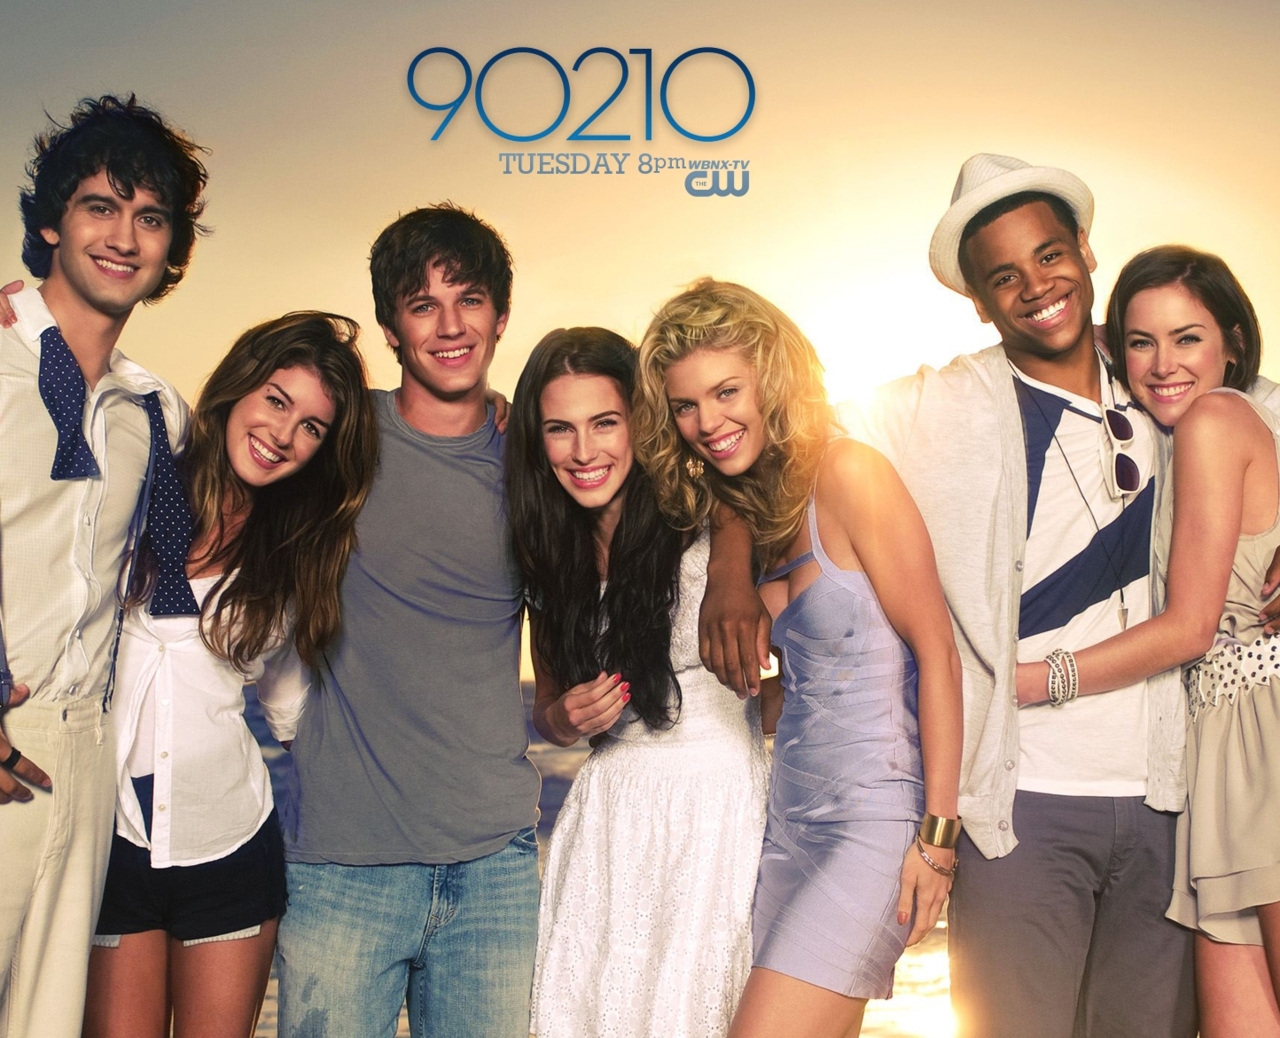 cast - 90210 Photo (30900410) - Fanpop